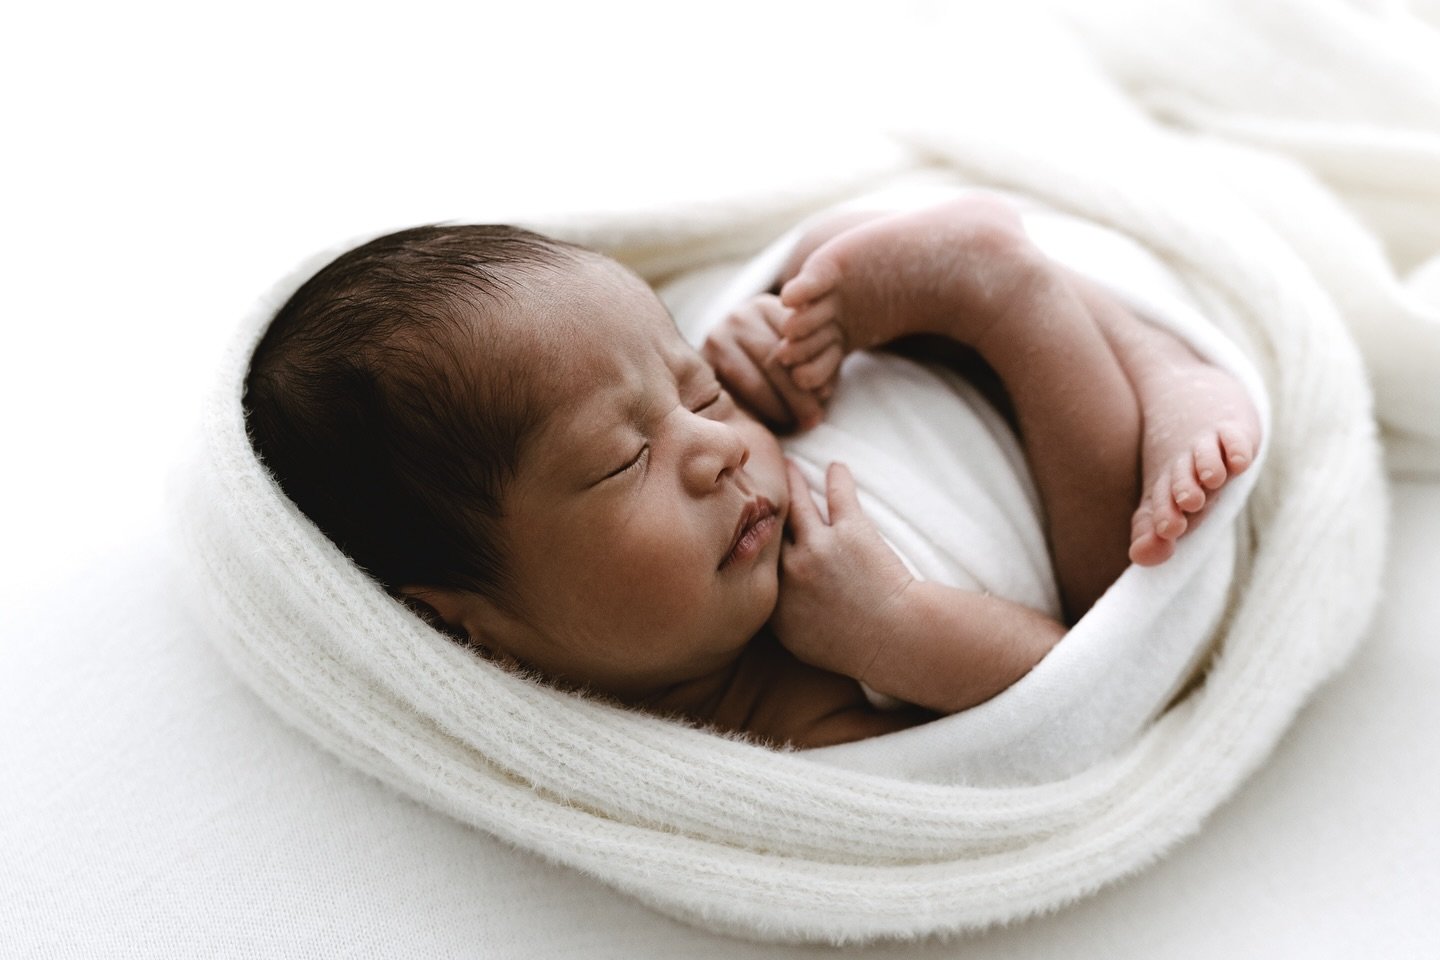 Perfect lil bundle ♡︎

#melbournephotographer #melbournemumsandbubs #newborn #newbornphotographer #newbornportrait
#naturalnewborn #naturalnewbornphotography